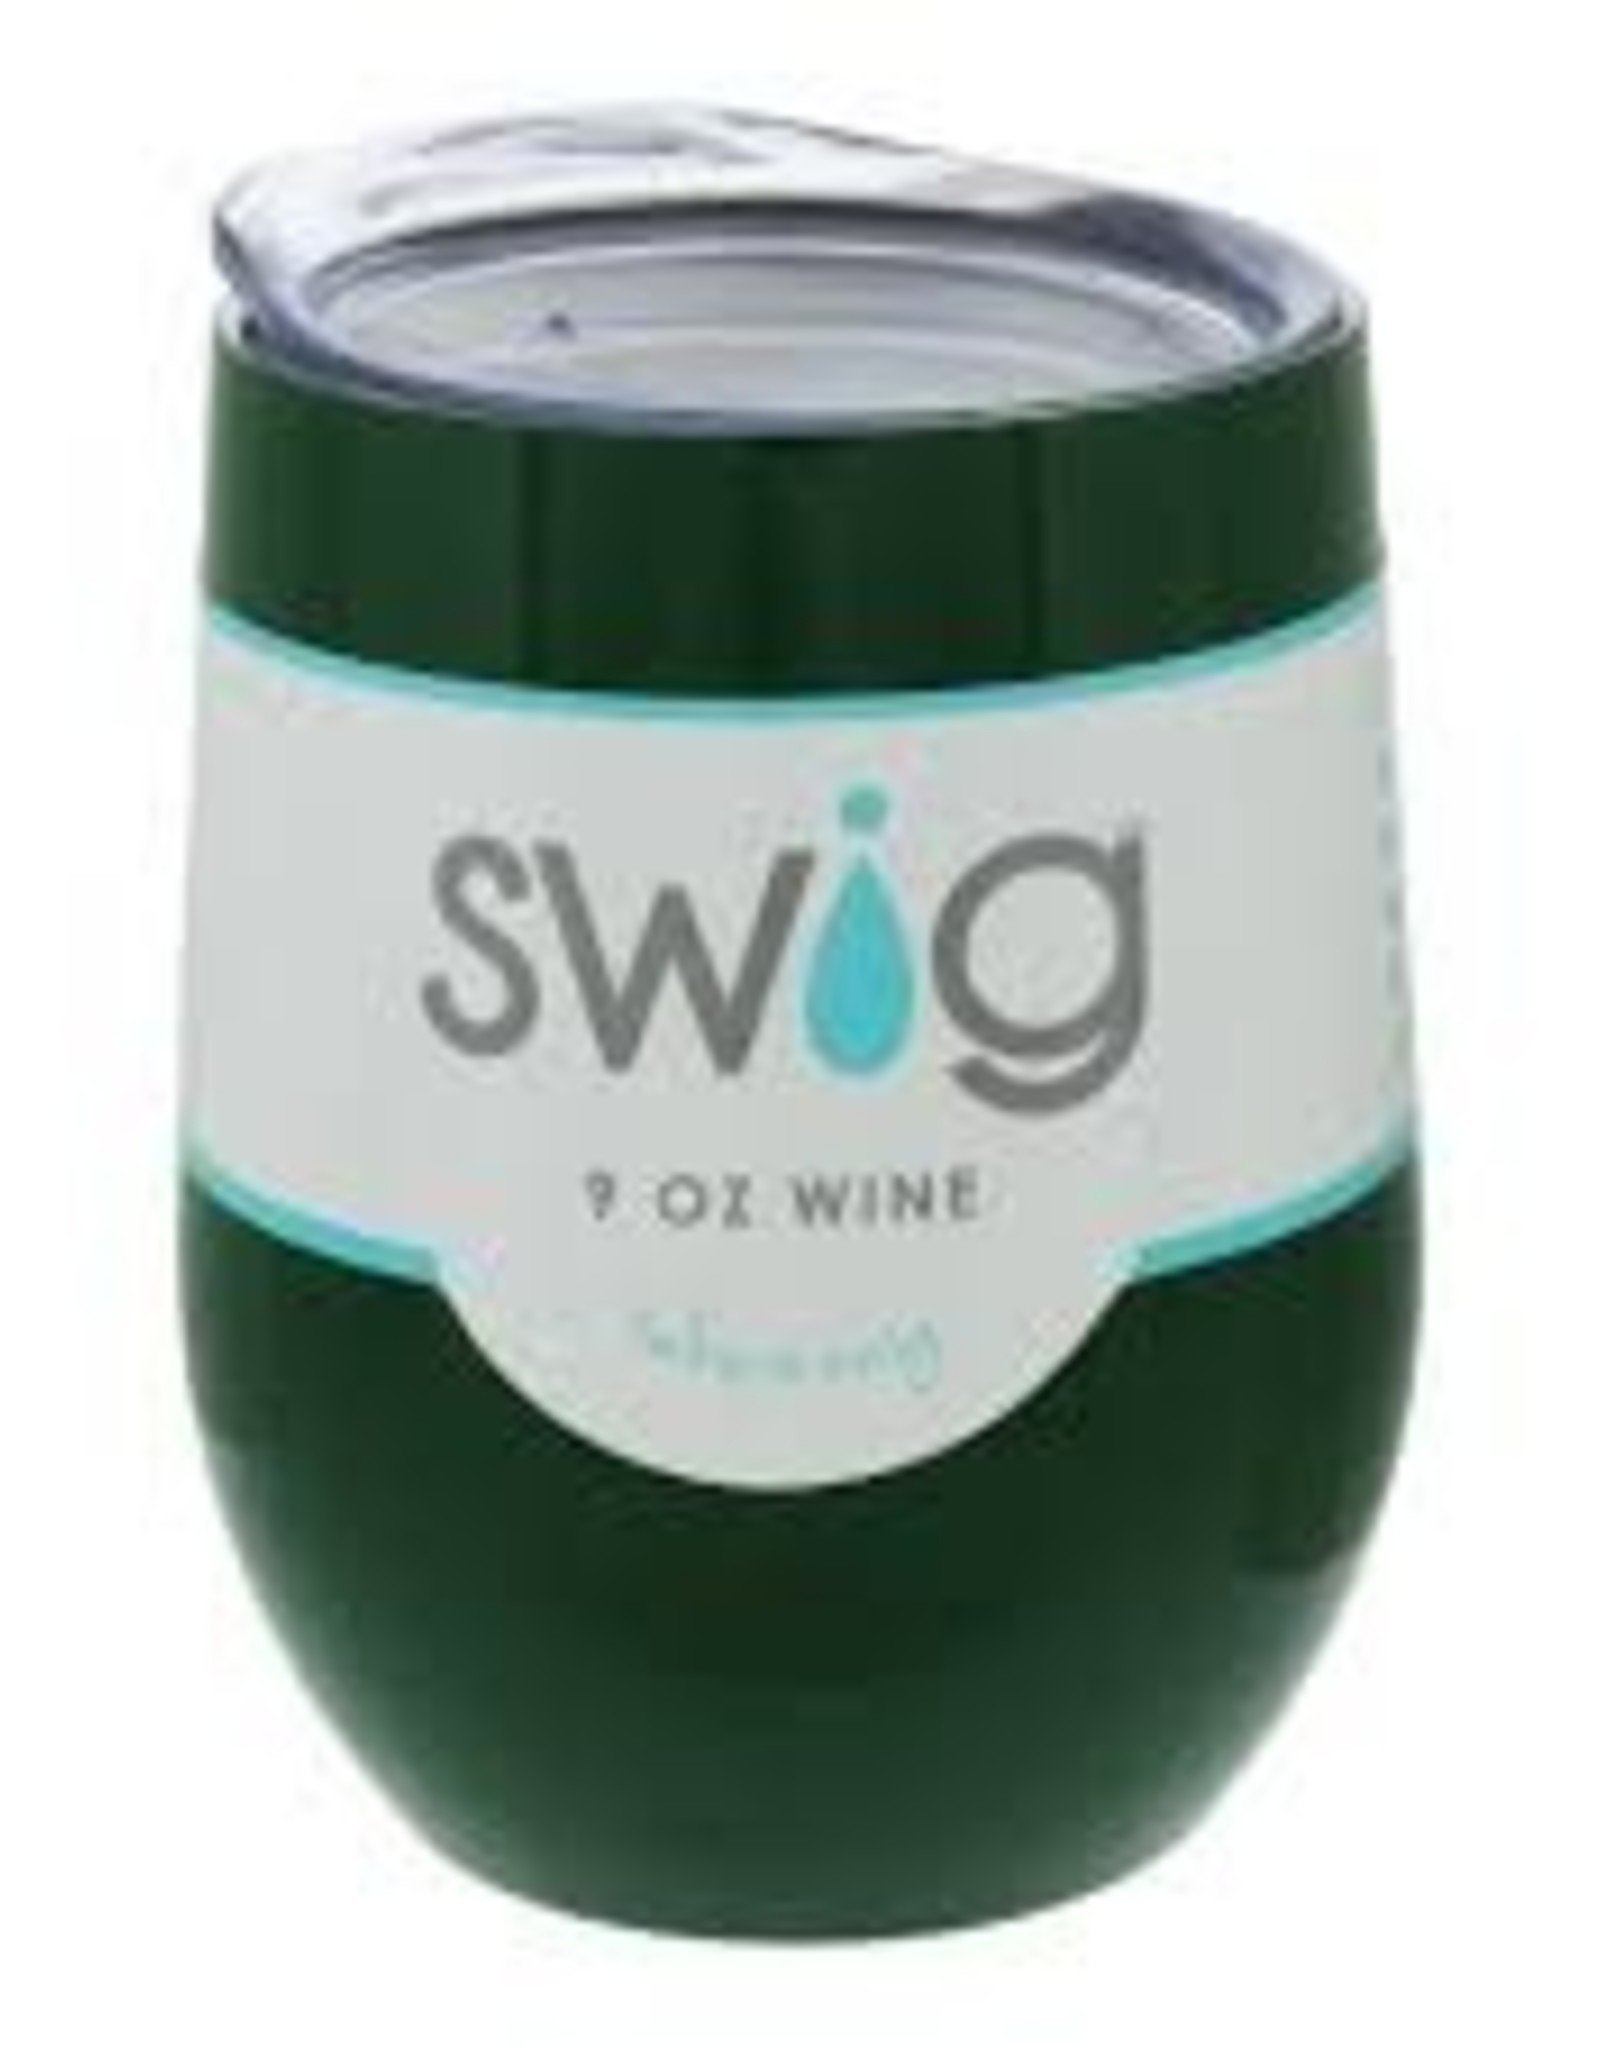 Swig Swig Stemless Wine Cup Green 12 OZ